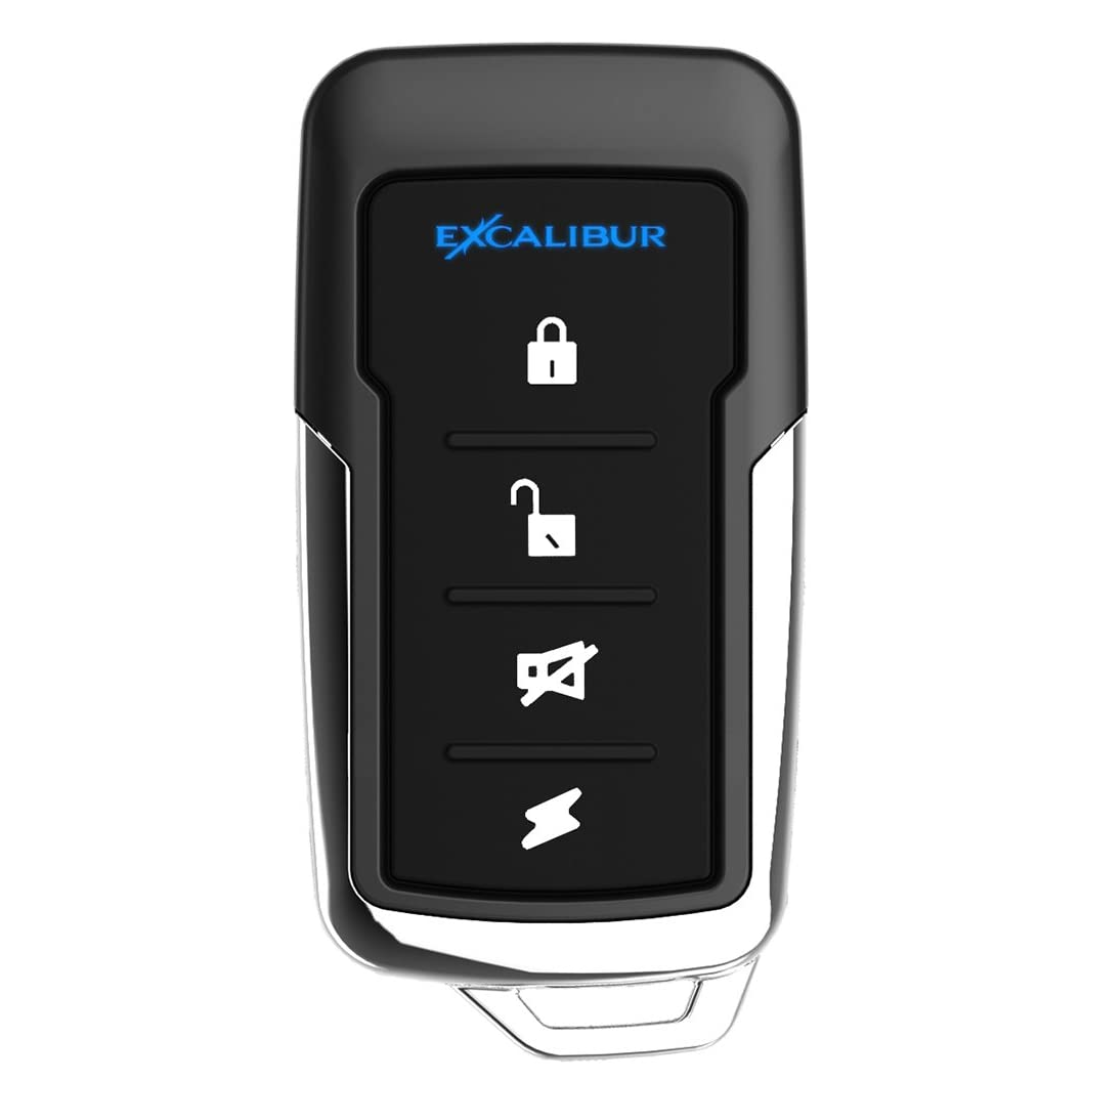 Excalibur Ke170 Keyless Car Alarm - image 3 of 5